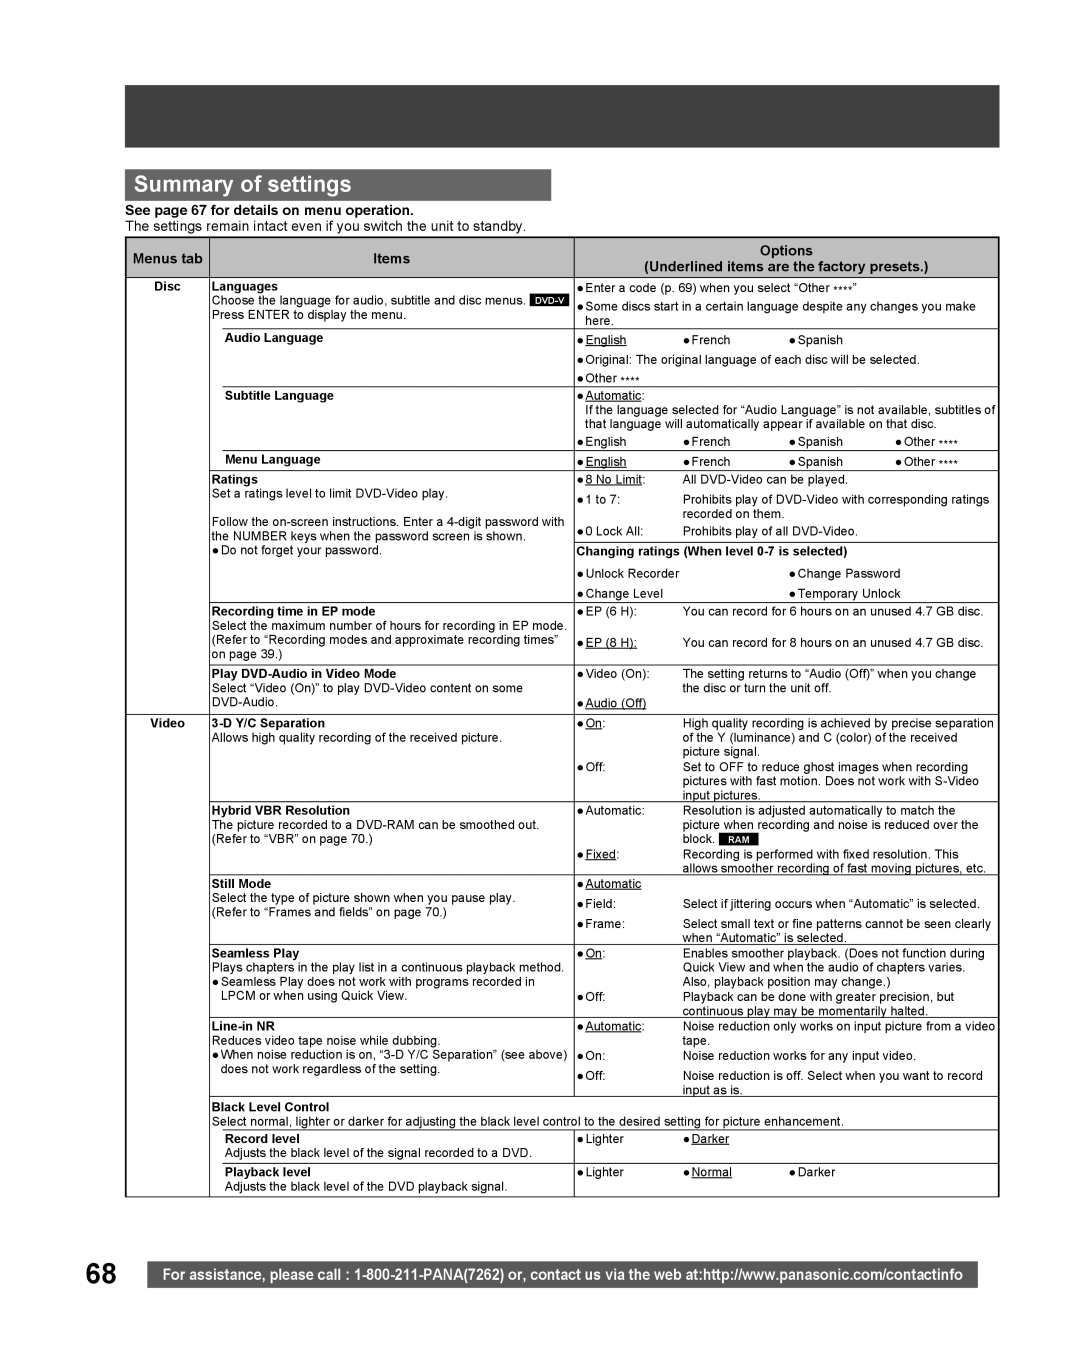 Panasonic TC 22LR30 manual Summary of settings, See page 67 for details on menu operation, Menus tab, Items, Options 